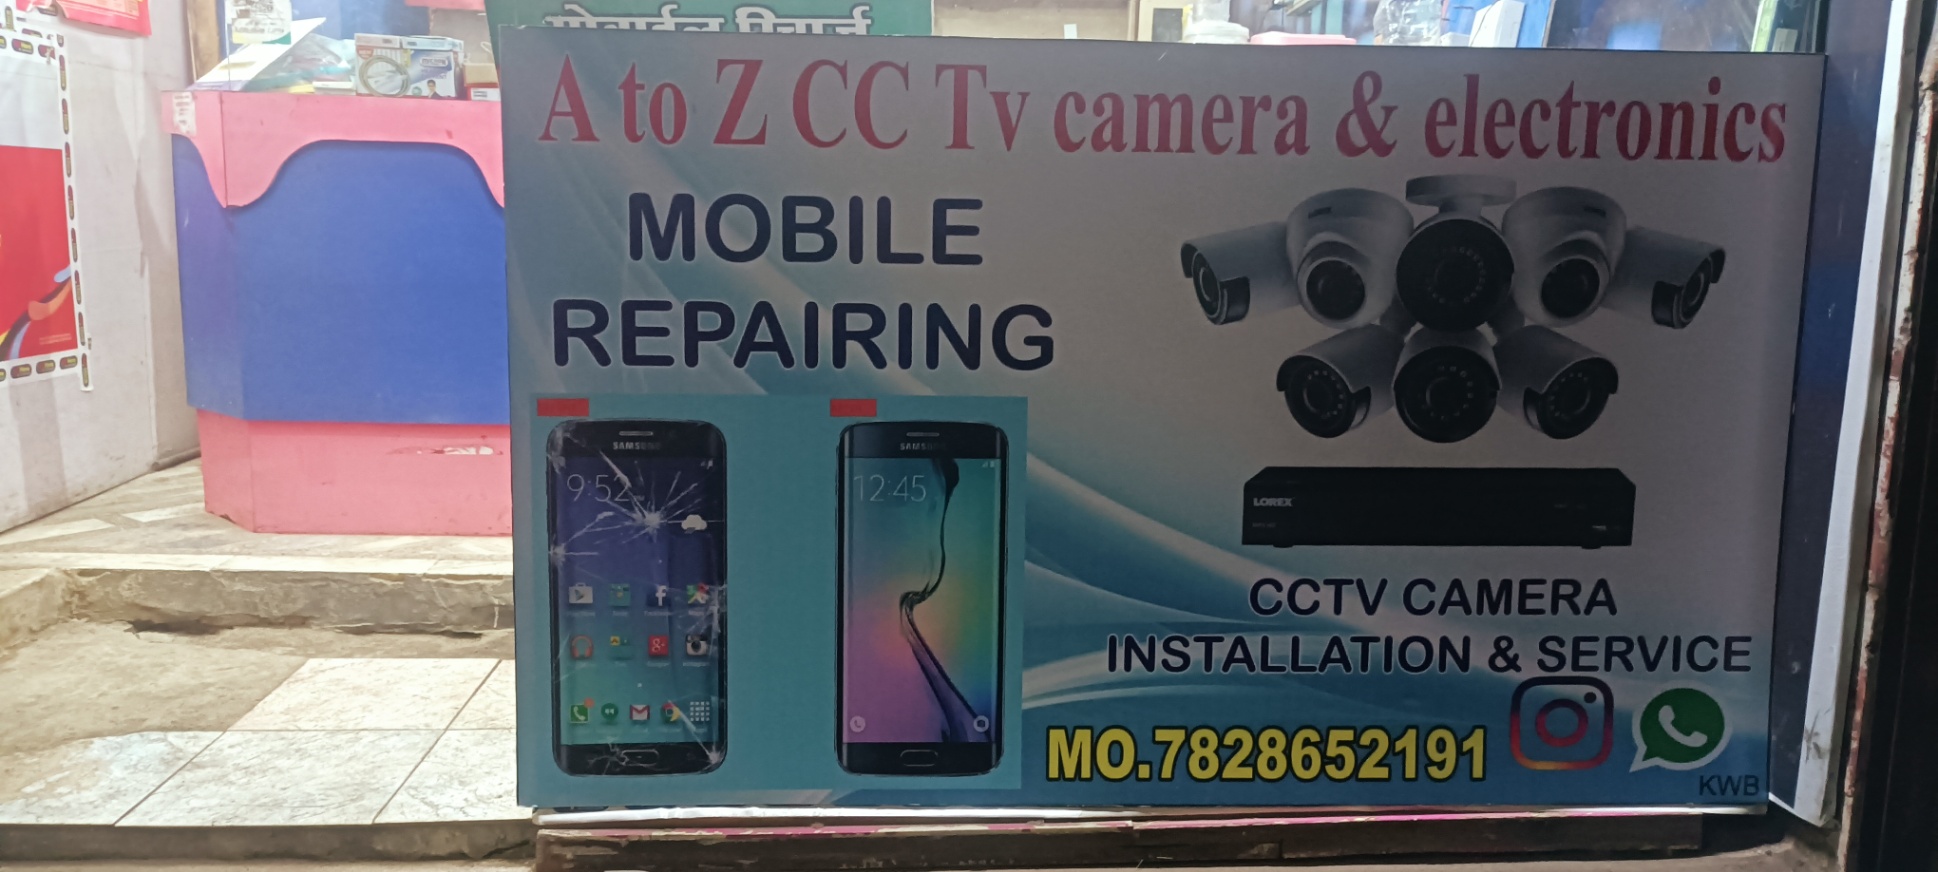 A To Z CC Tv camera dealer Jabalpur 